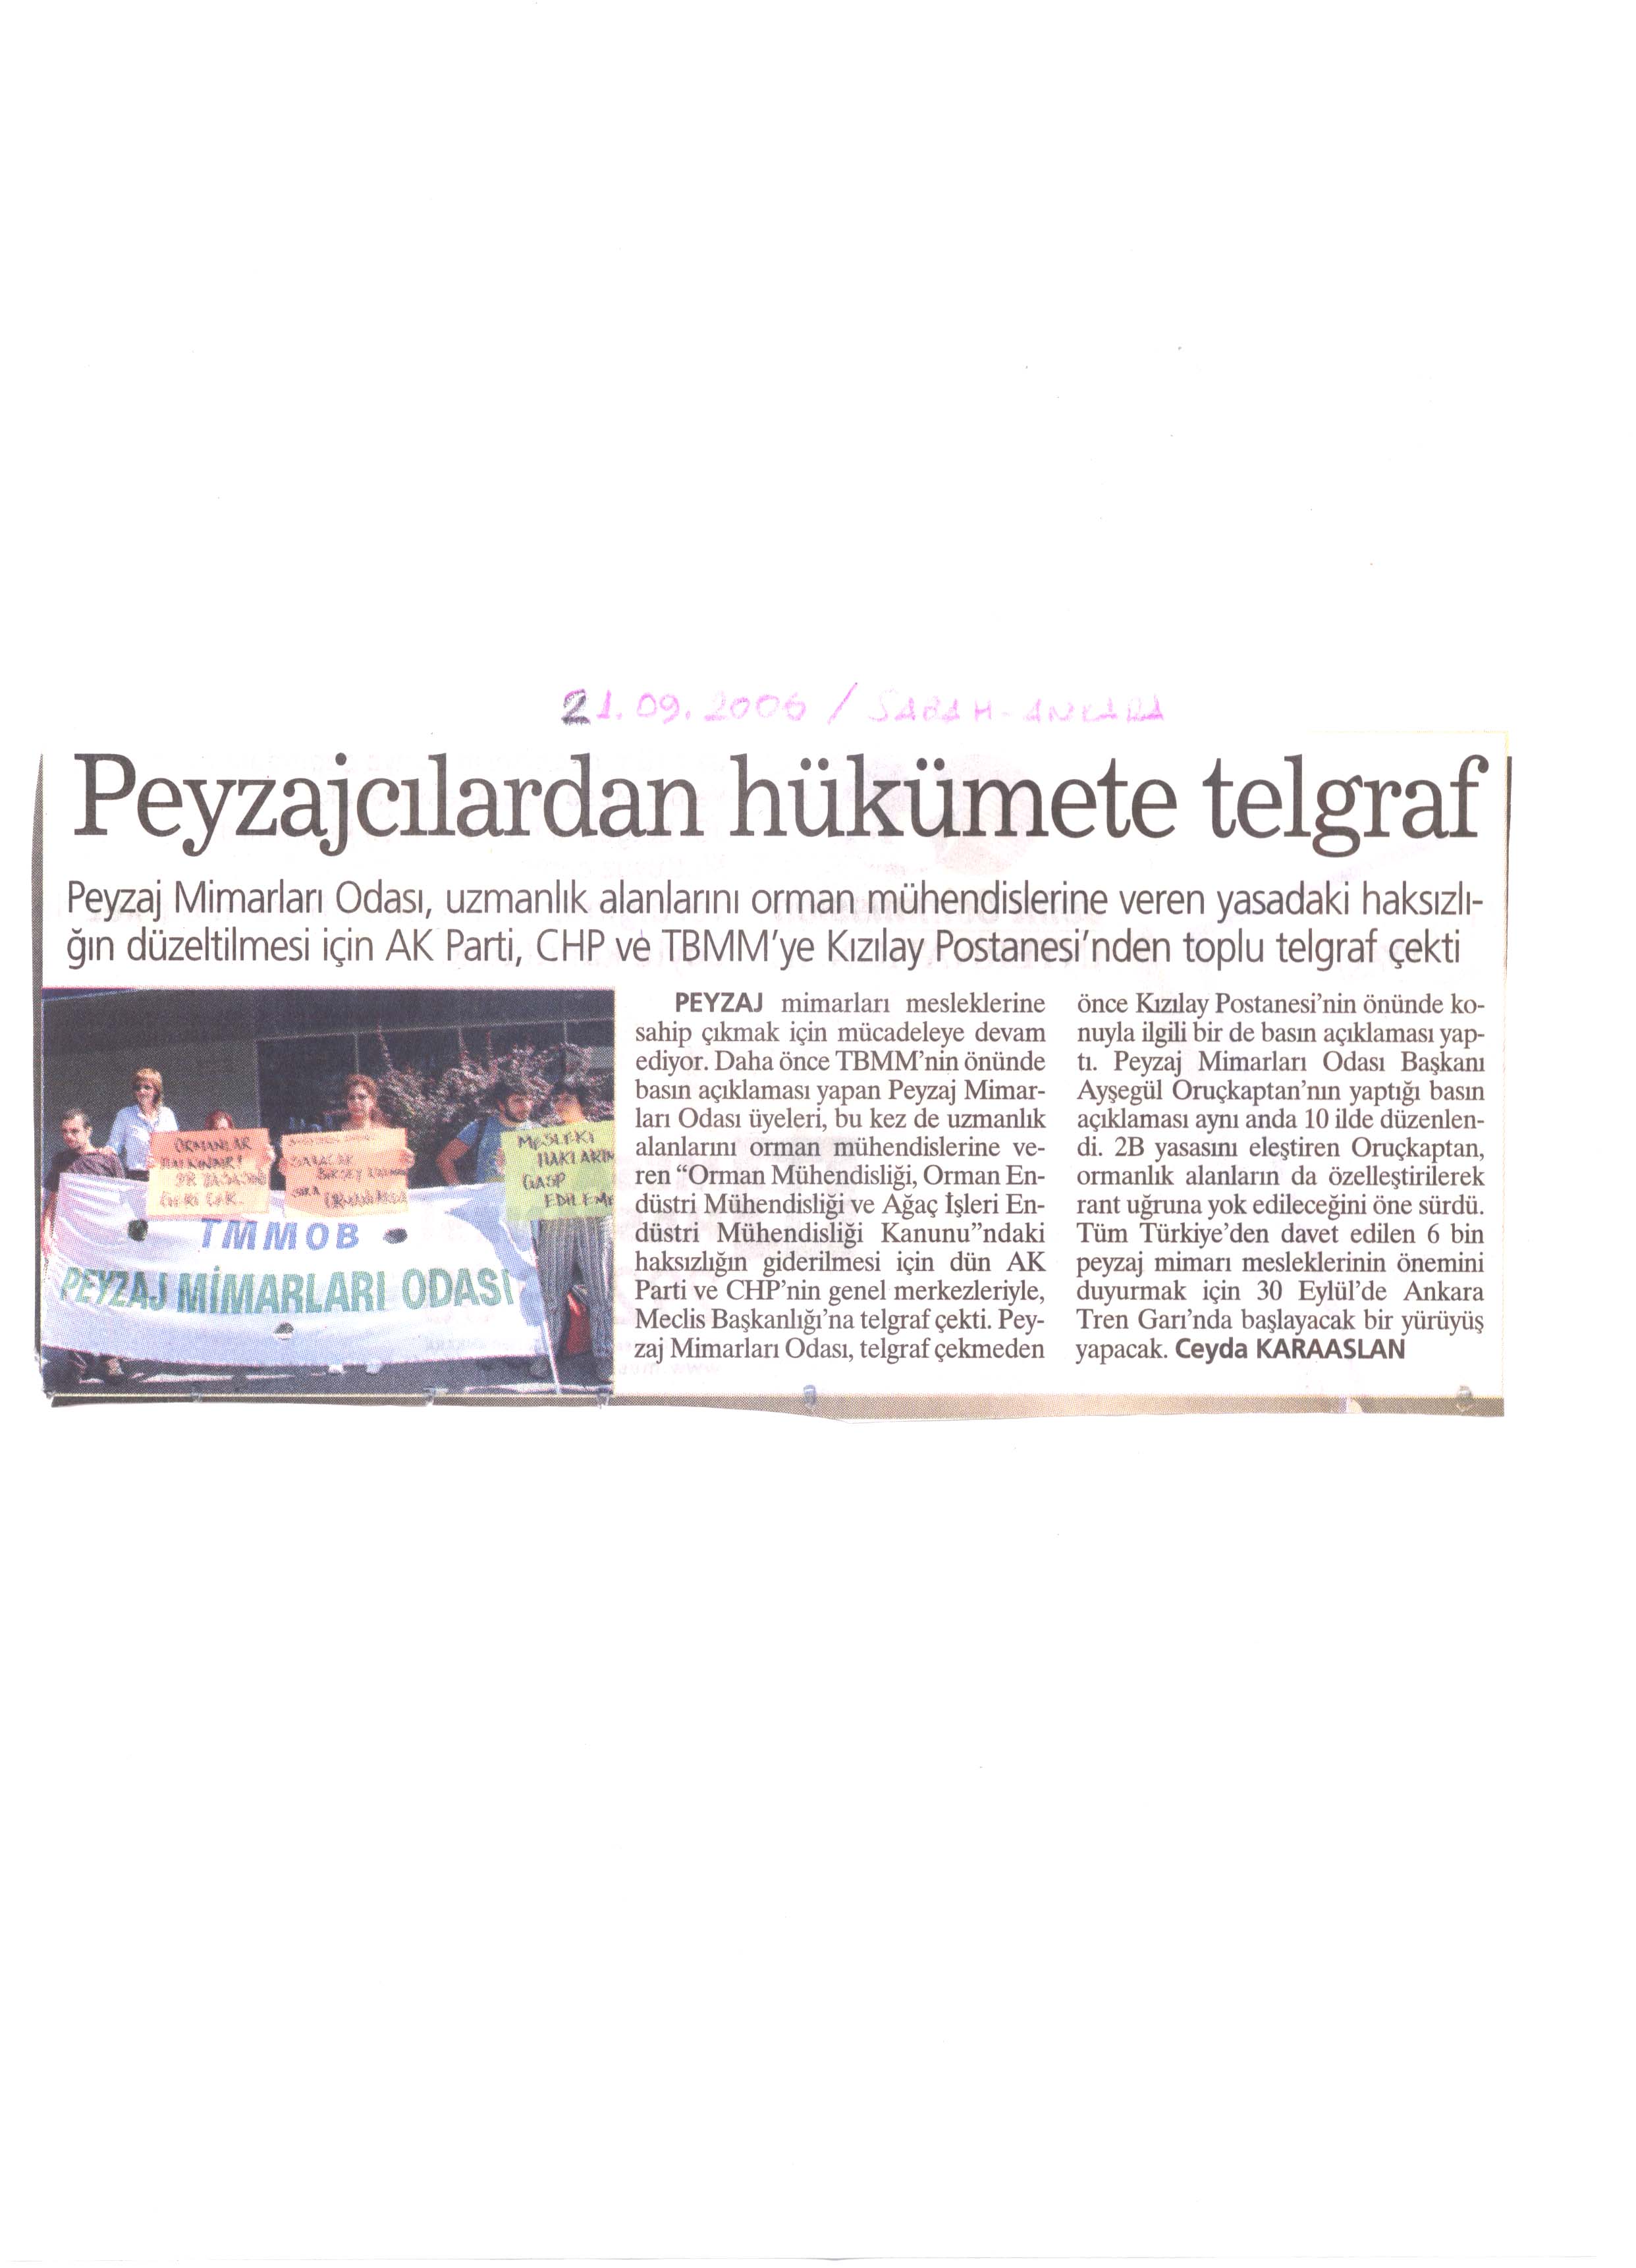 "PEYZAJ MİMARLARINDAN HÜKÜMETE TELGRAF" SABAH-ANKARA 21.09.2006